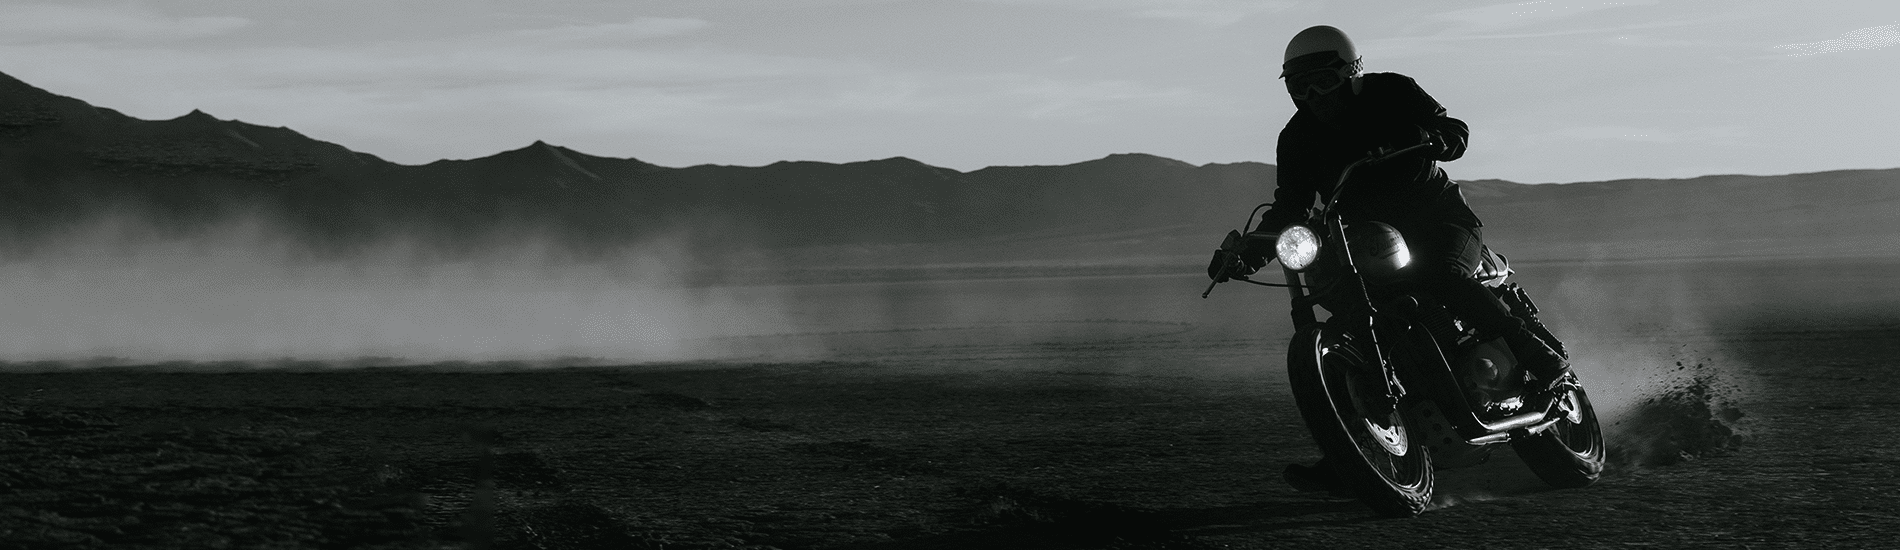 Male rider riding across the desert)